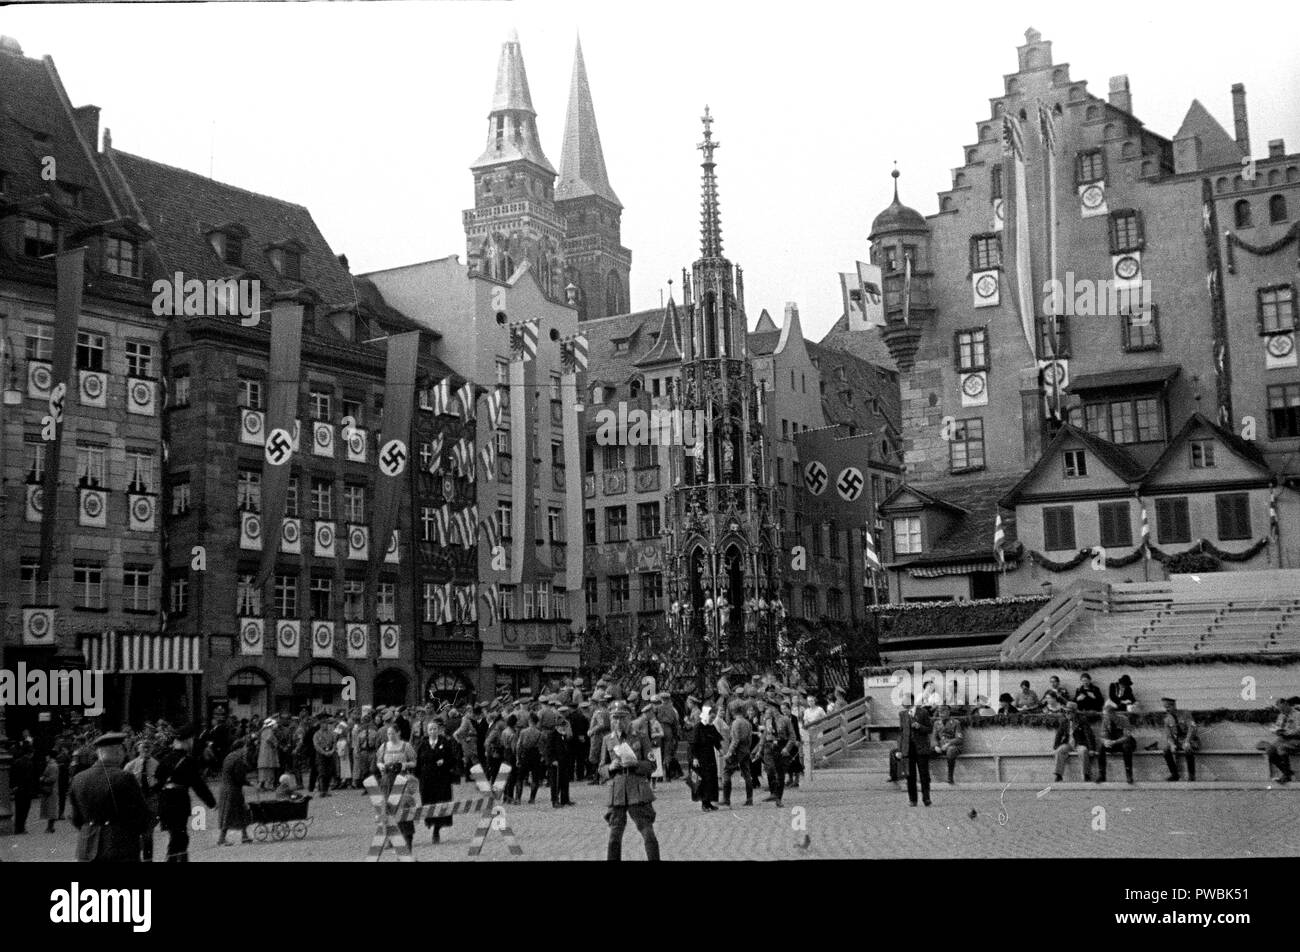 Tedeschi intorno al Schoene Brunnen o bella fontana nella piazza Hauptmarkt. Norimberga, Baviera, Germania per la Germania nazista NSDAP Nuremberg Rally 1936 Parade al rally terra 10 Settembre 1936 Foto Stock